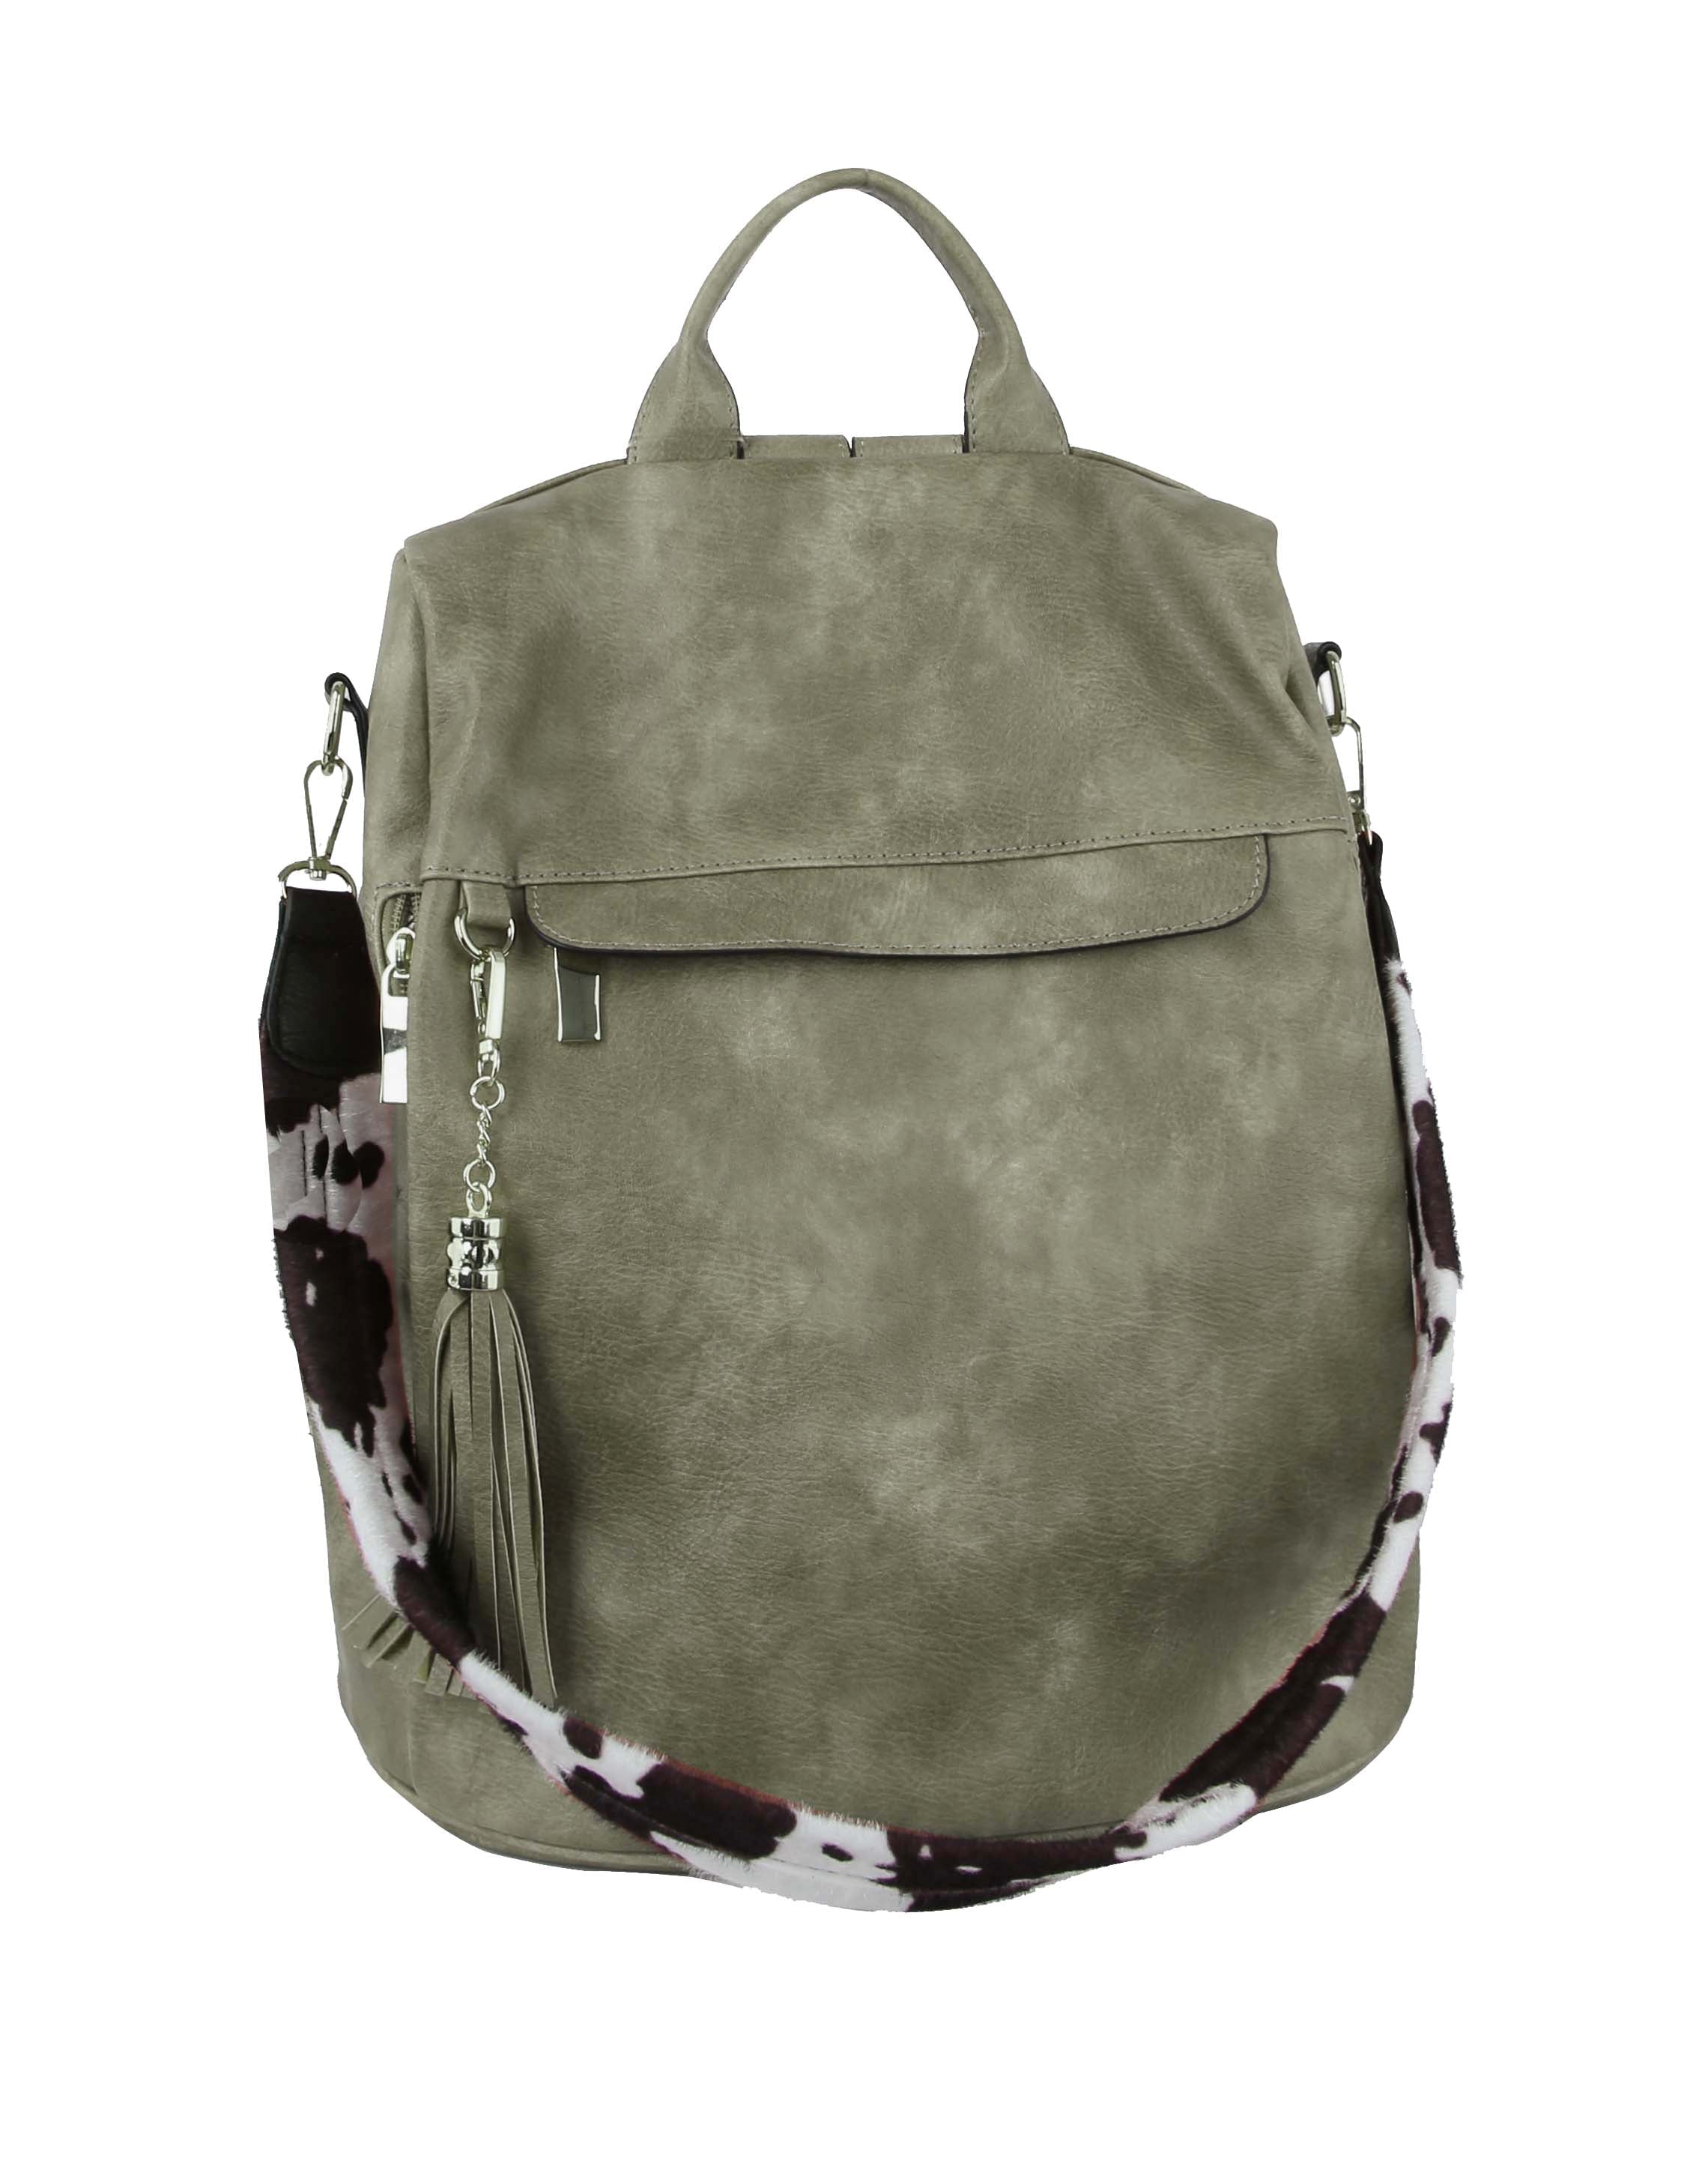 Backpack Purse Convertible Bookbag purse